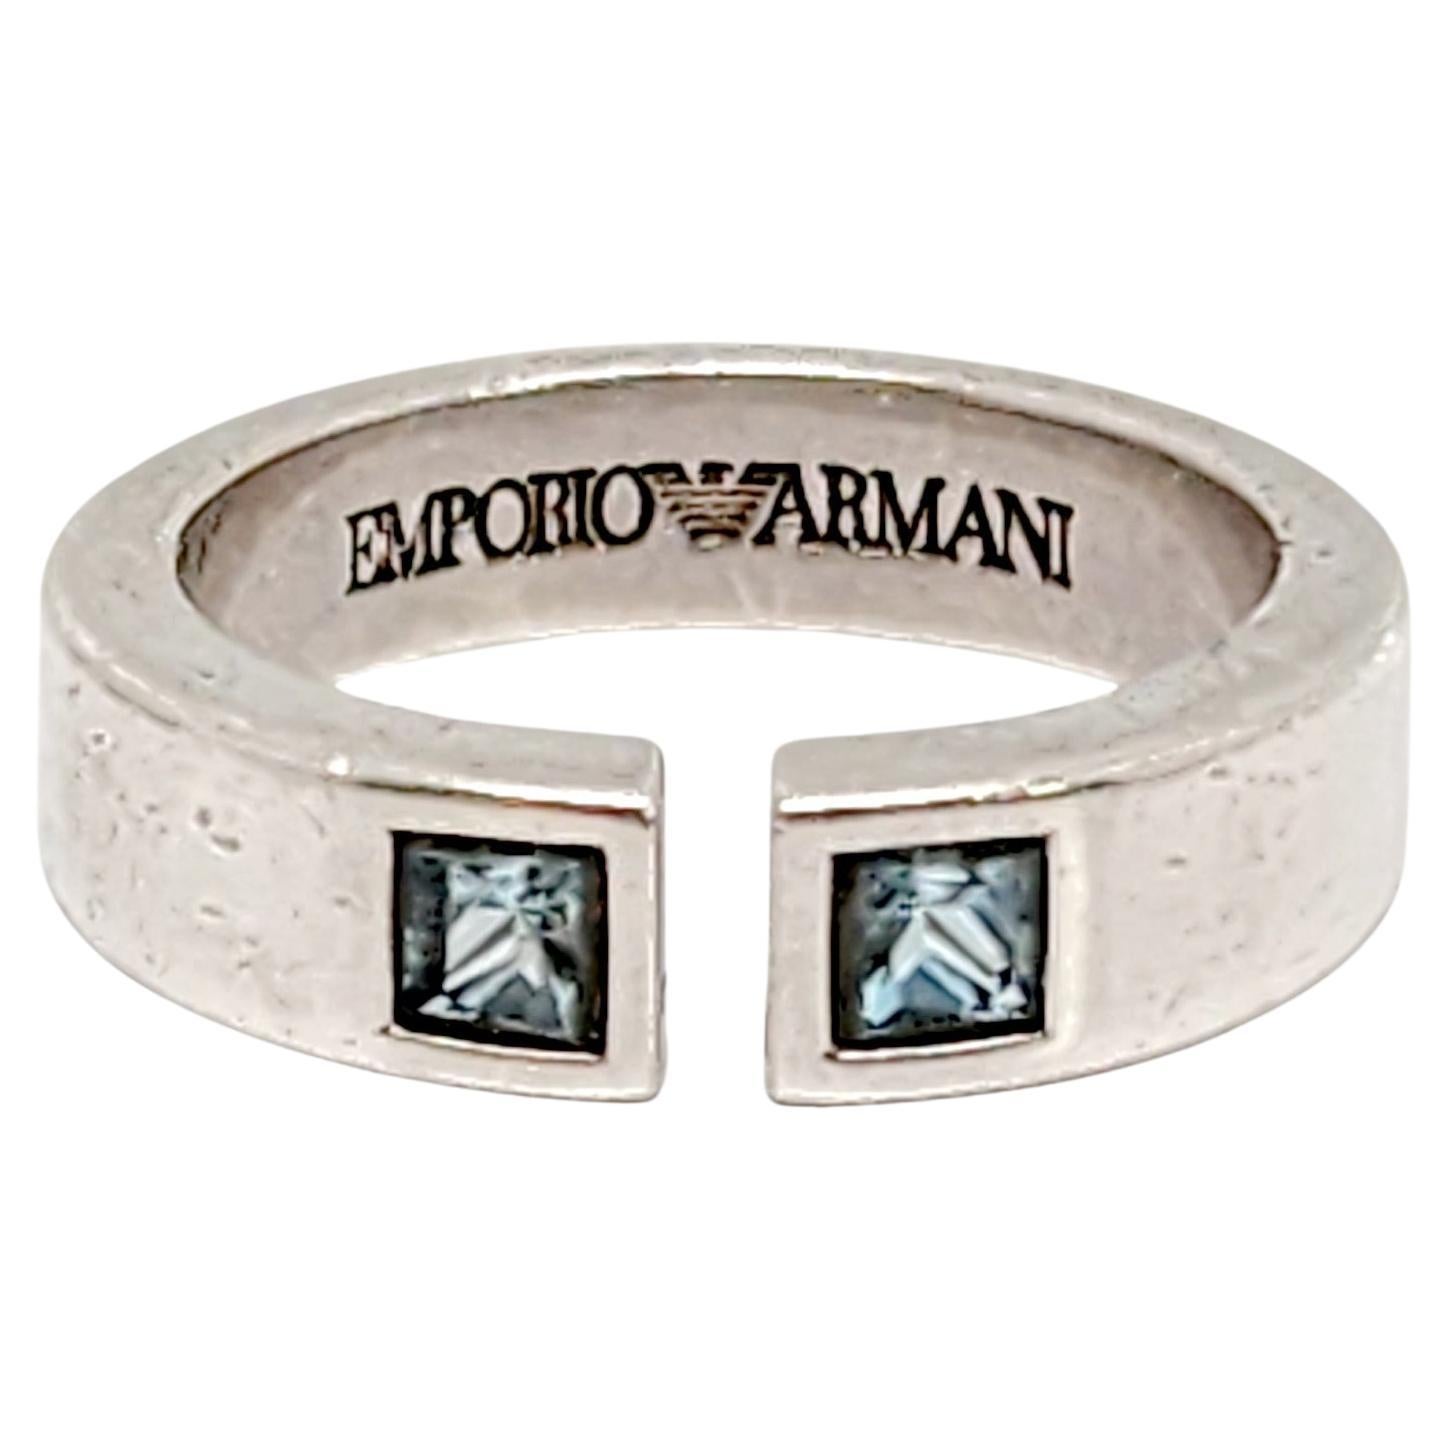 Emporio Armani Sterling Silver Blue Stone Band Ring Size 6.75 #14782